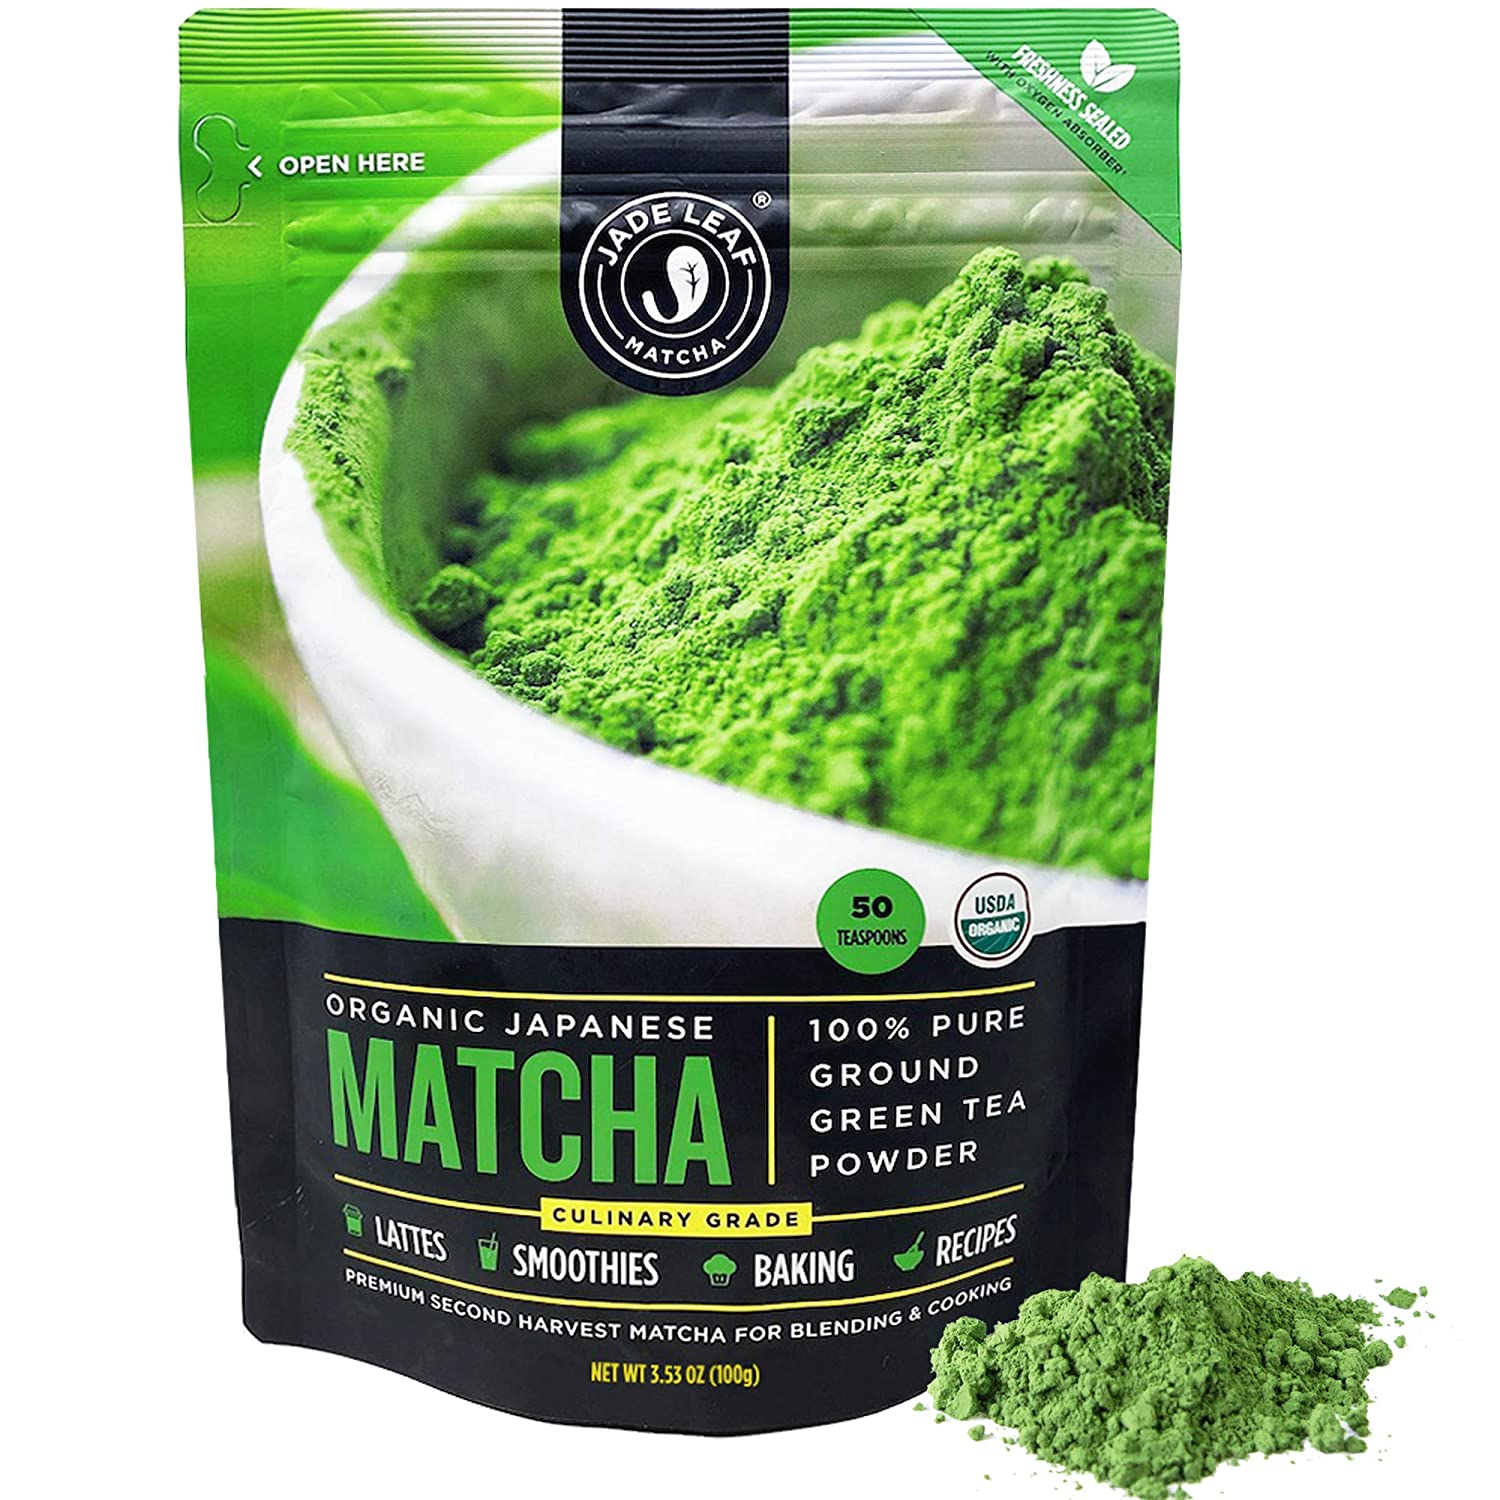 <strong>6. Jade Leaf Organic Matcha Green Tea Powder</strong>